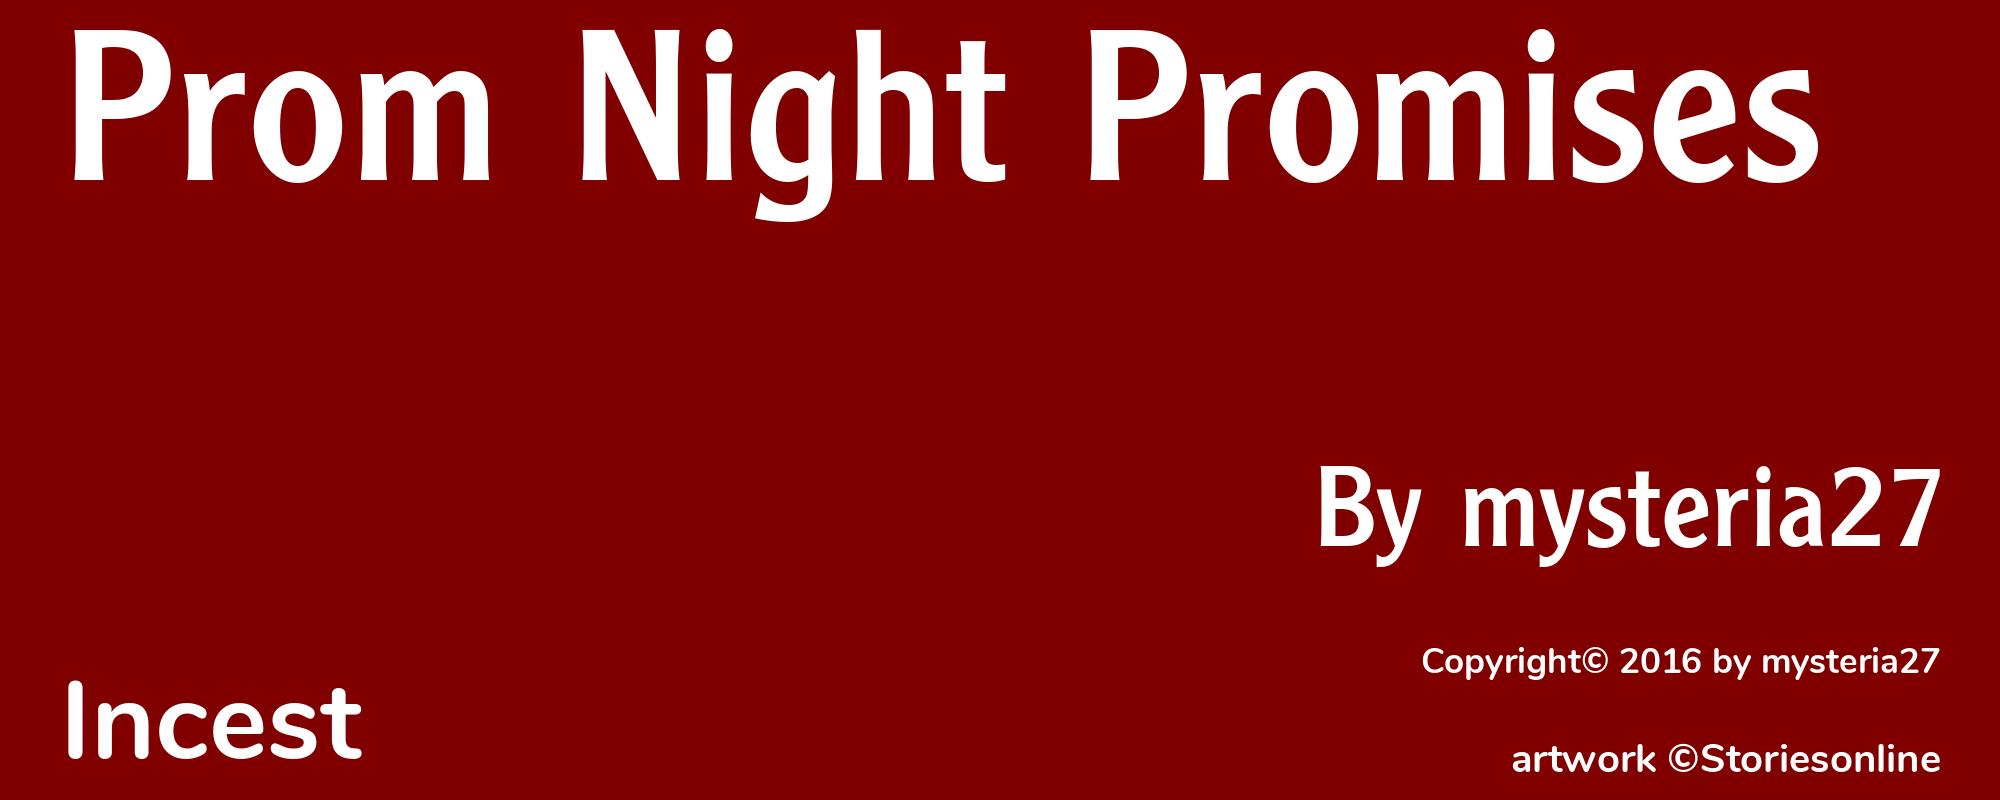 Prom Night Promises - Cover